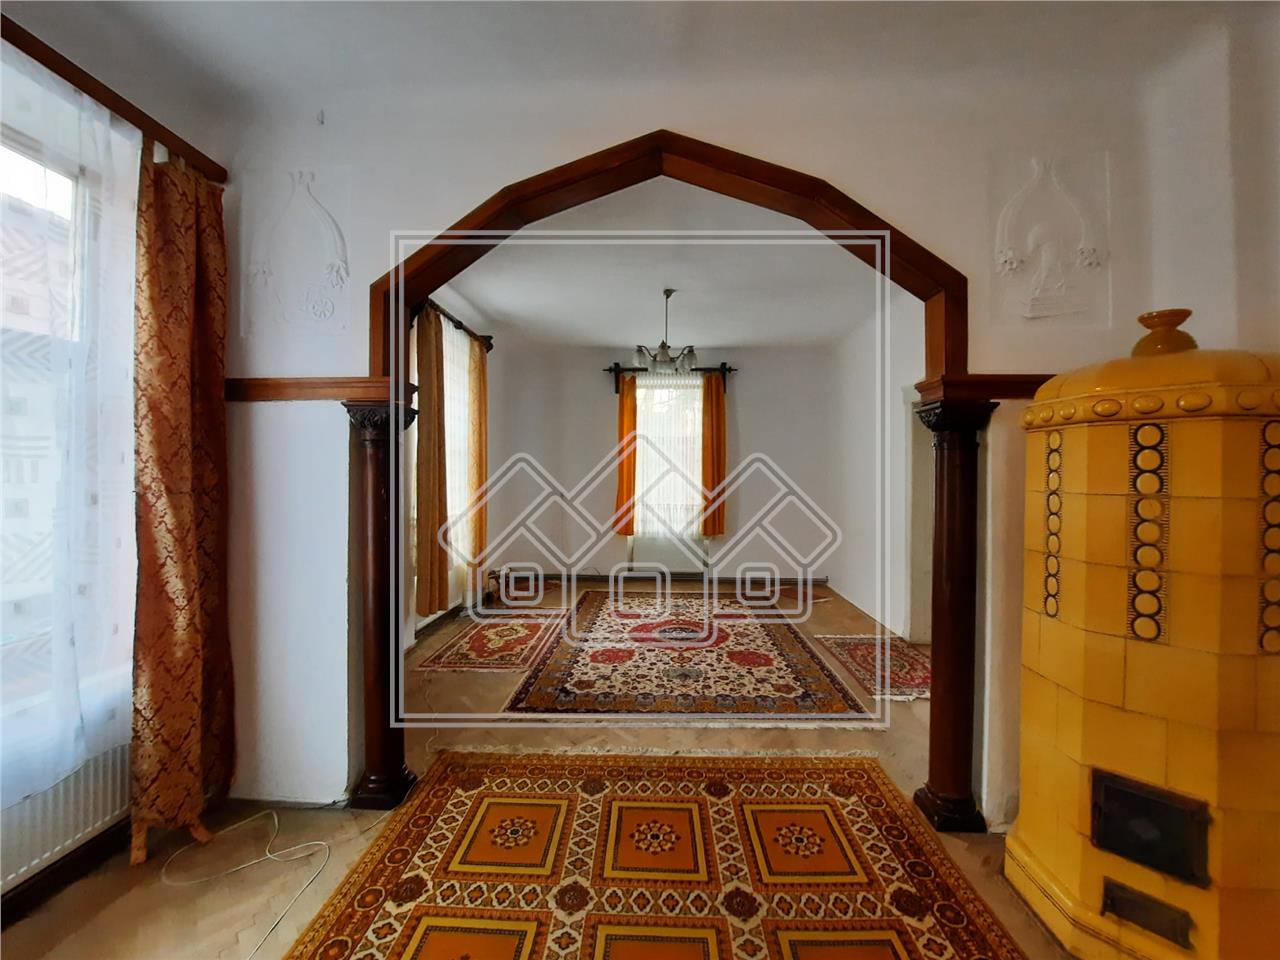 Apartment for sale in Sibiu - at home, 3 bedrooms, basement - P. Cibin